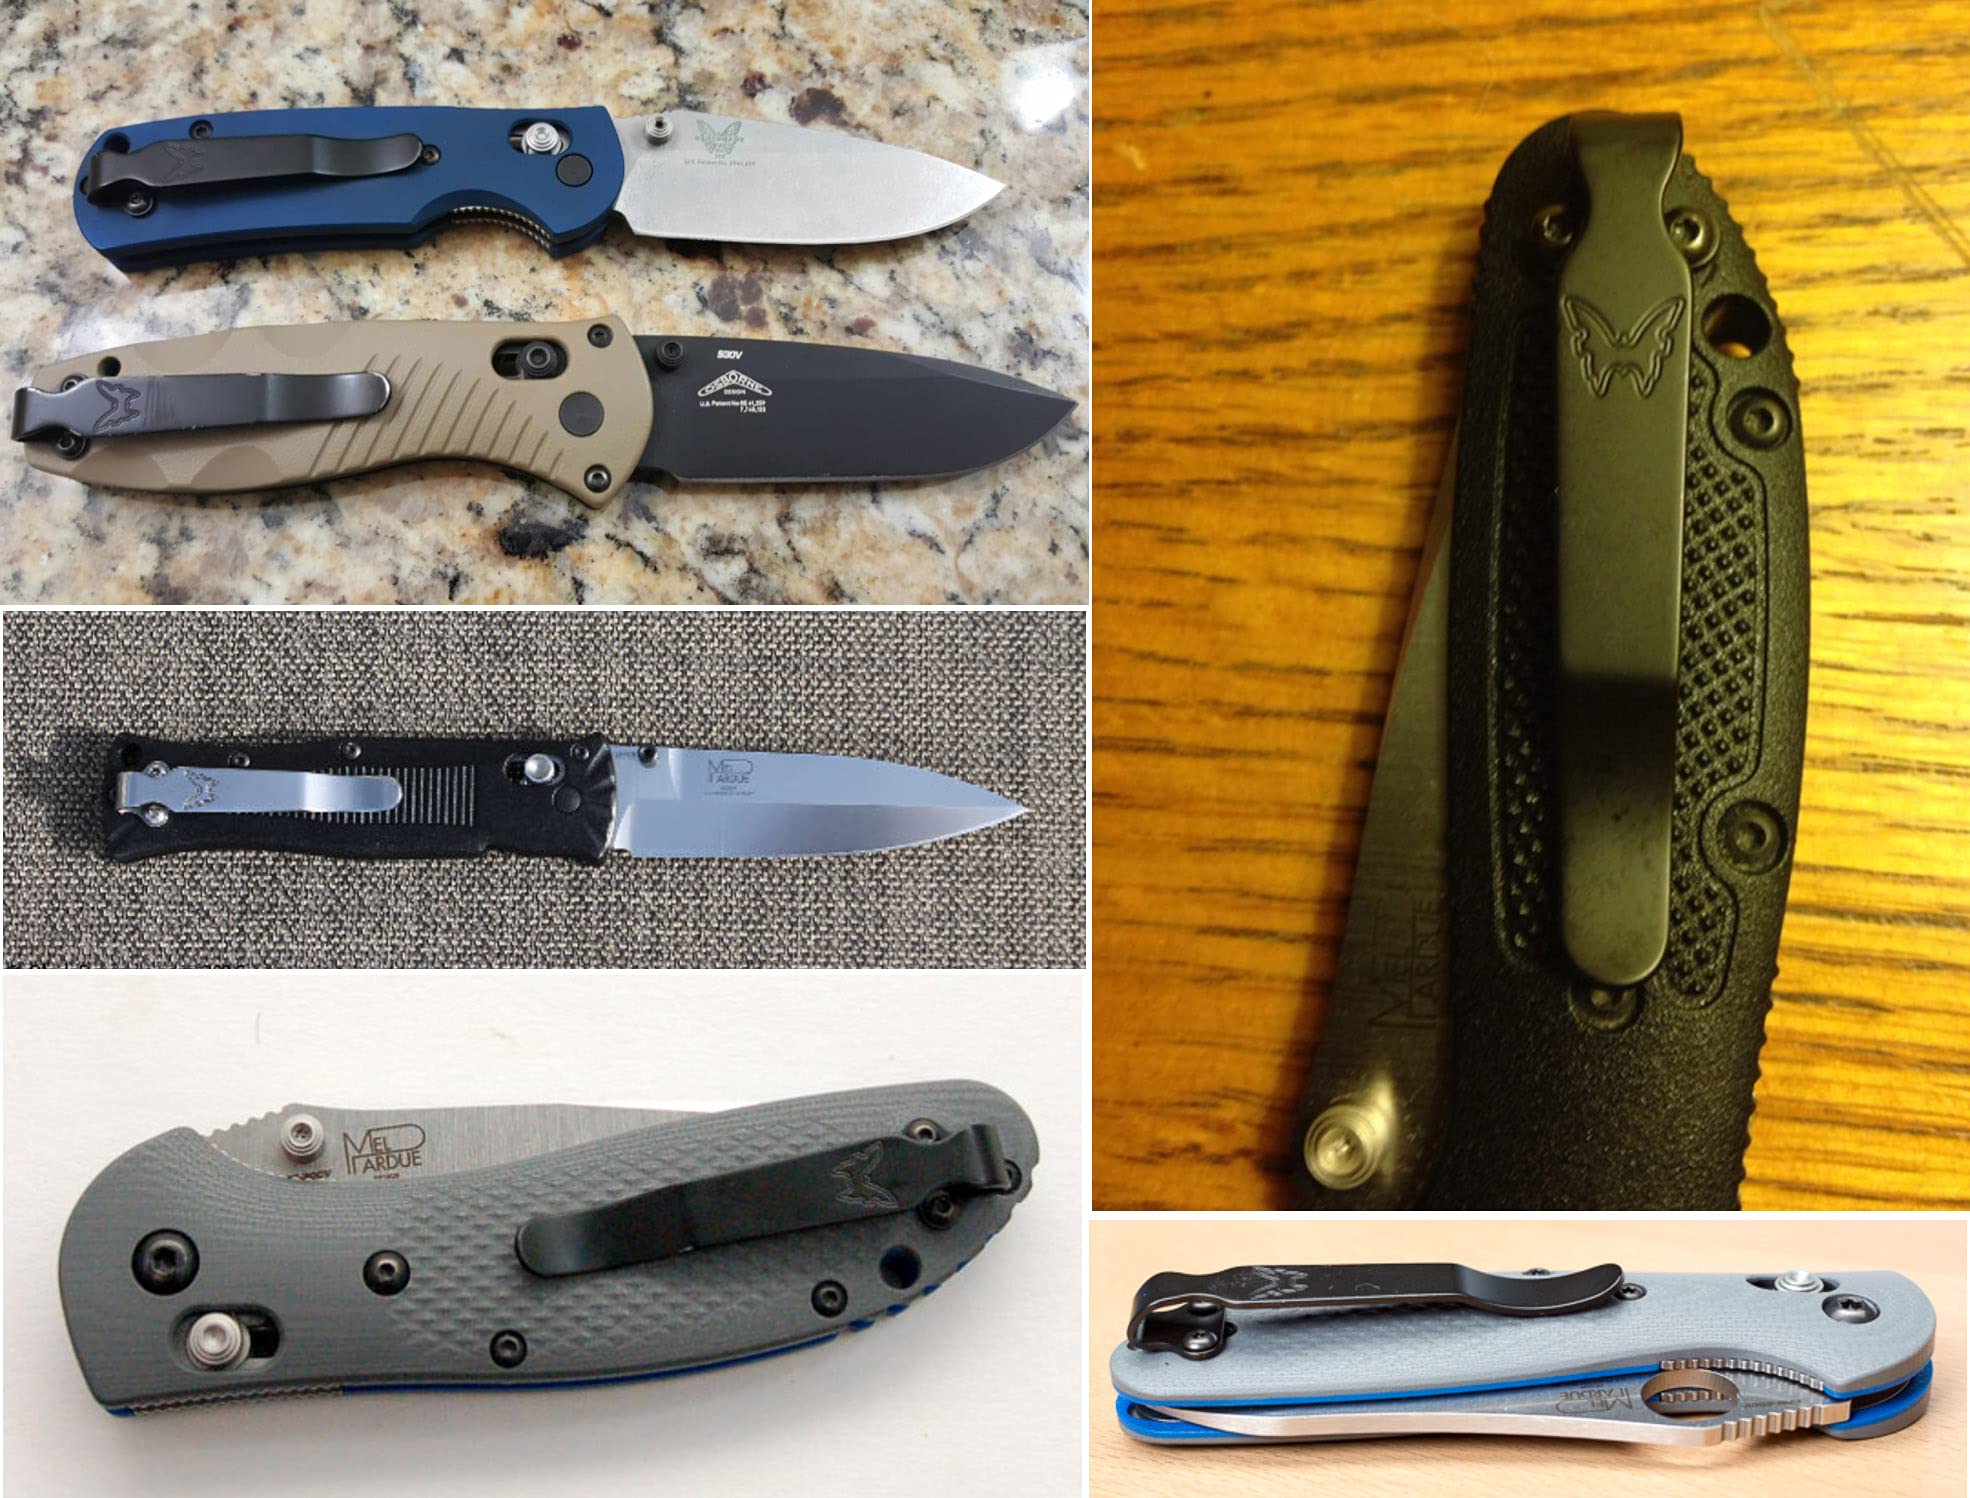 HAISDA Deep Carry pocket clips, Pocket Knife Clip for Knifemaker and DIY Folding Knives, Pack of 2